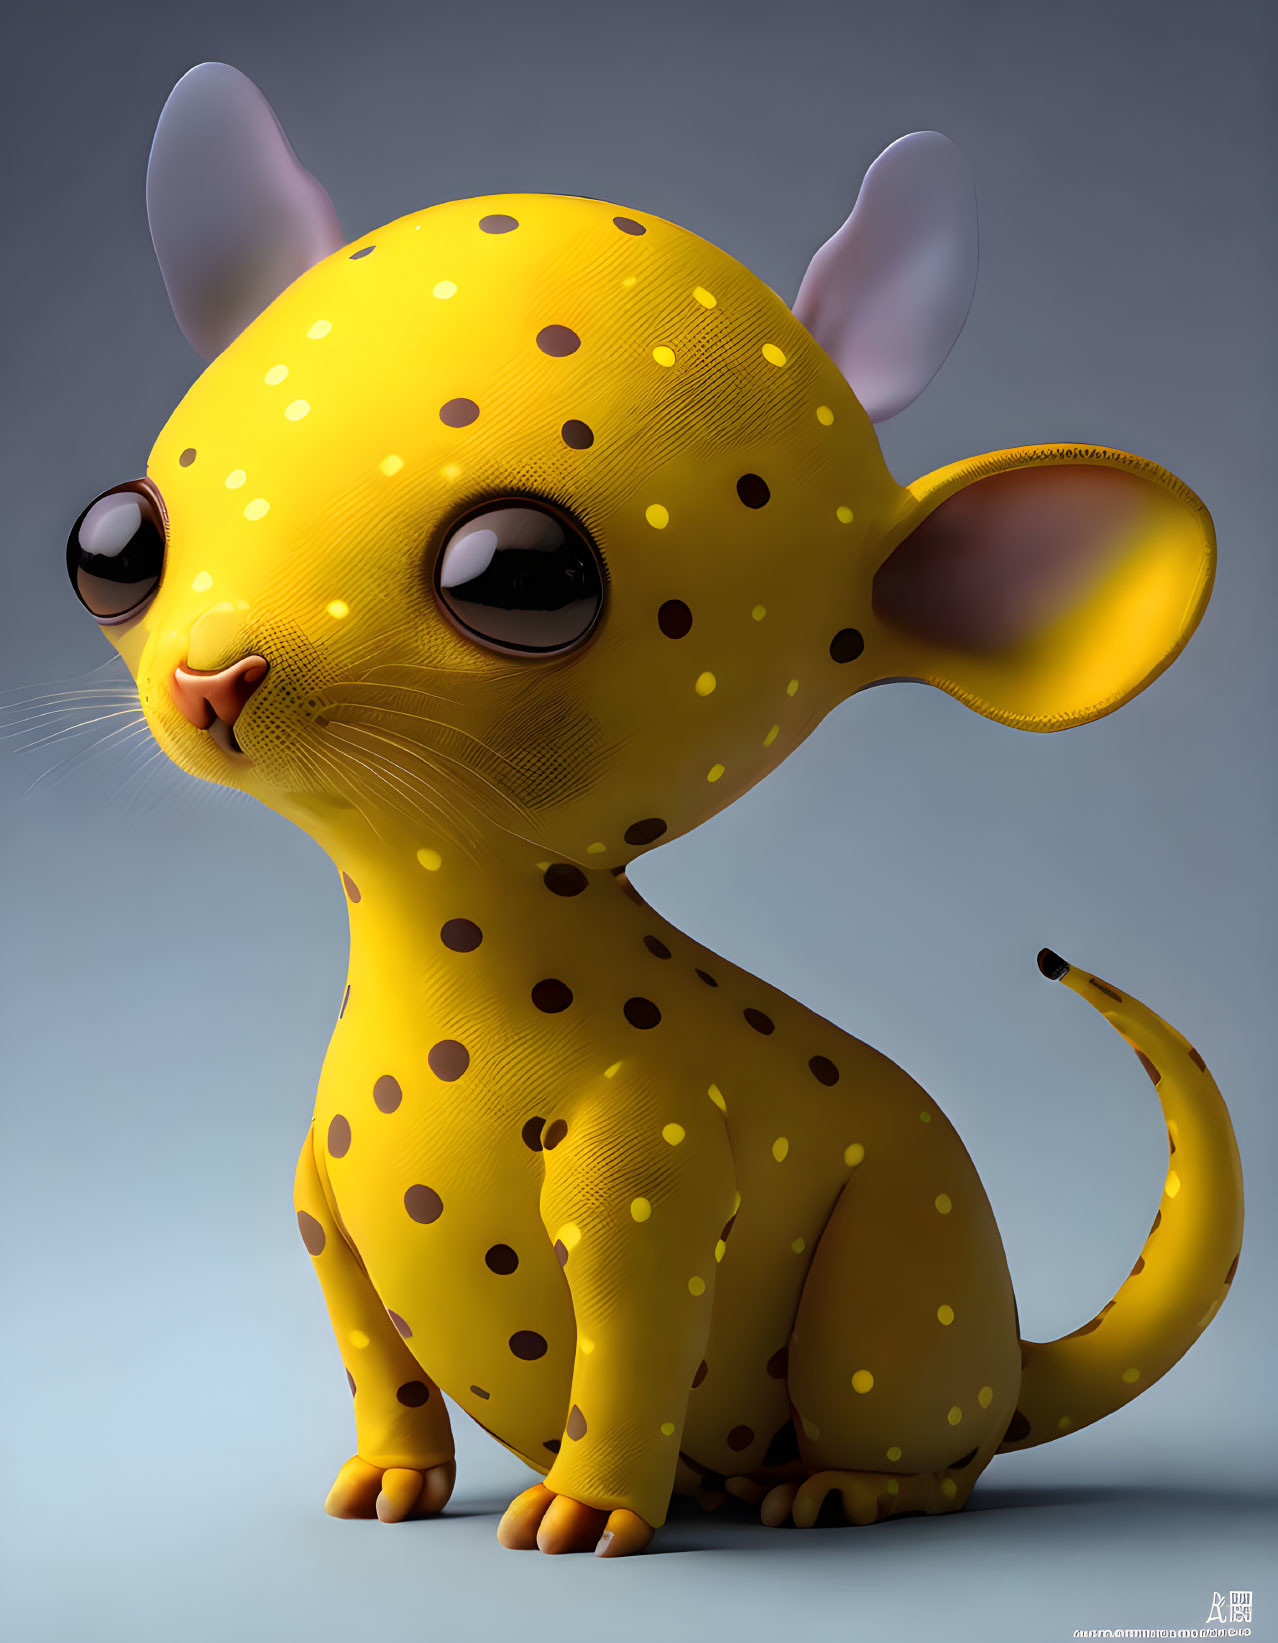 Yellow Polka-Dotted Fantastical Feline Creature Illustration